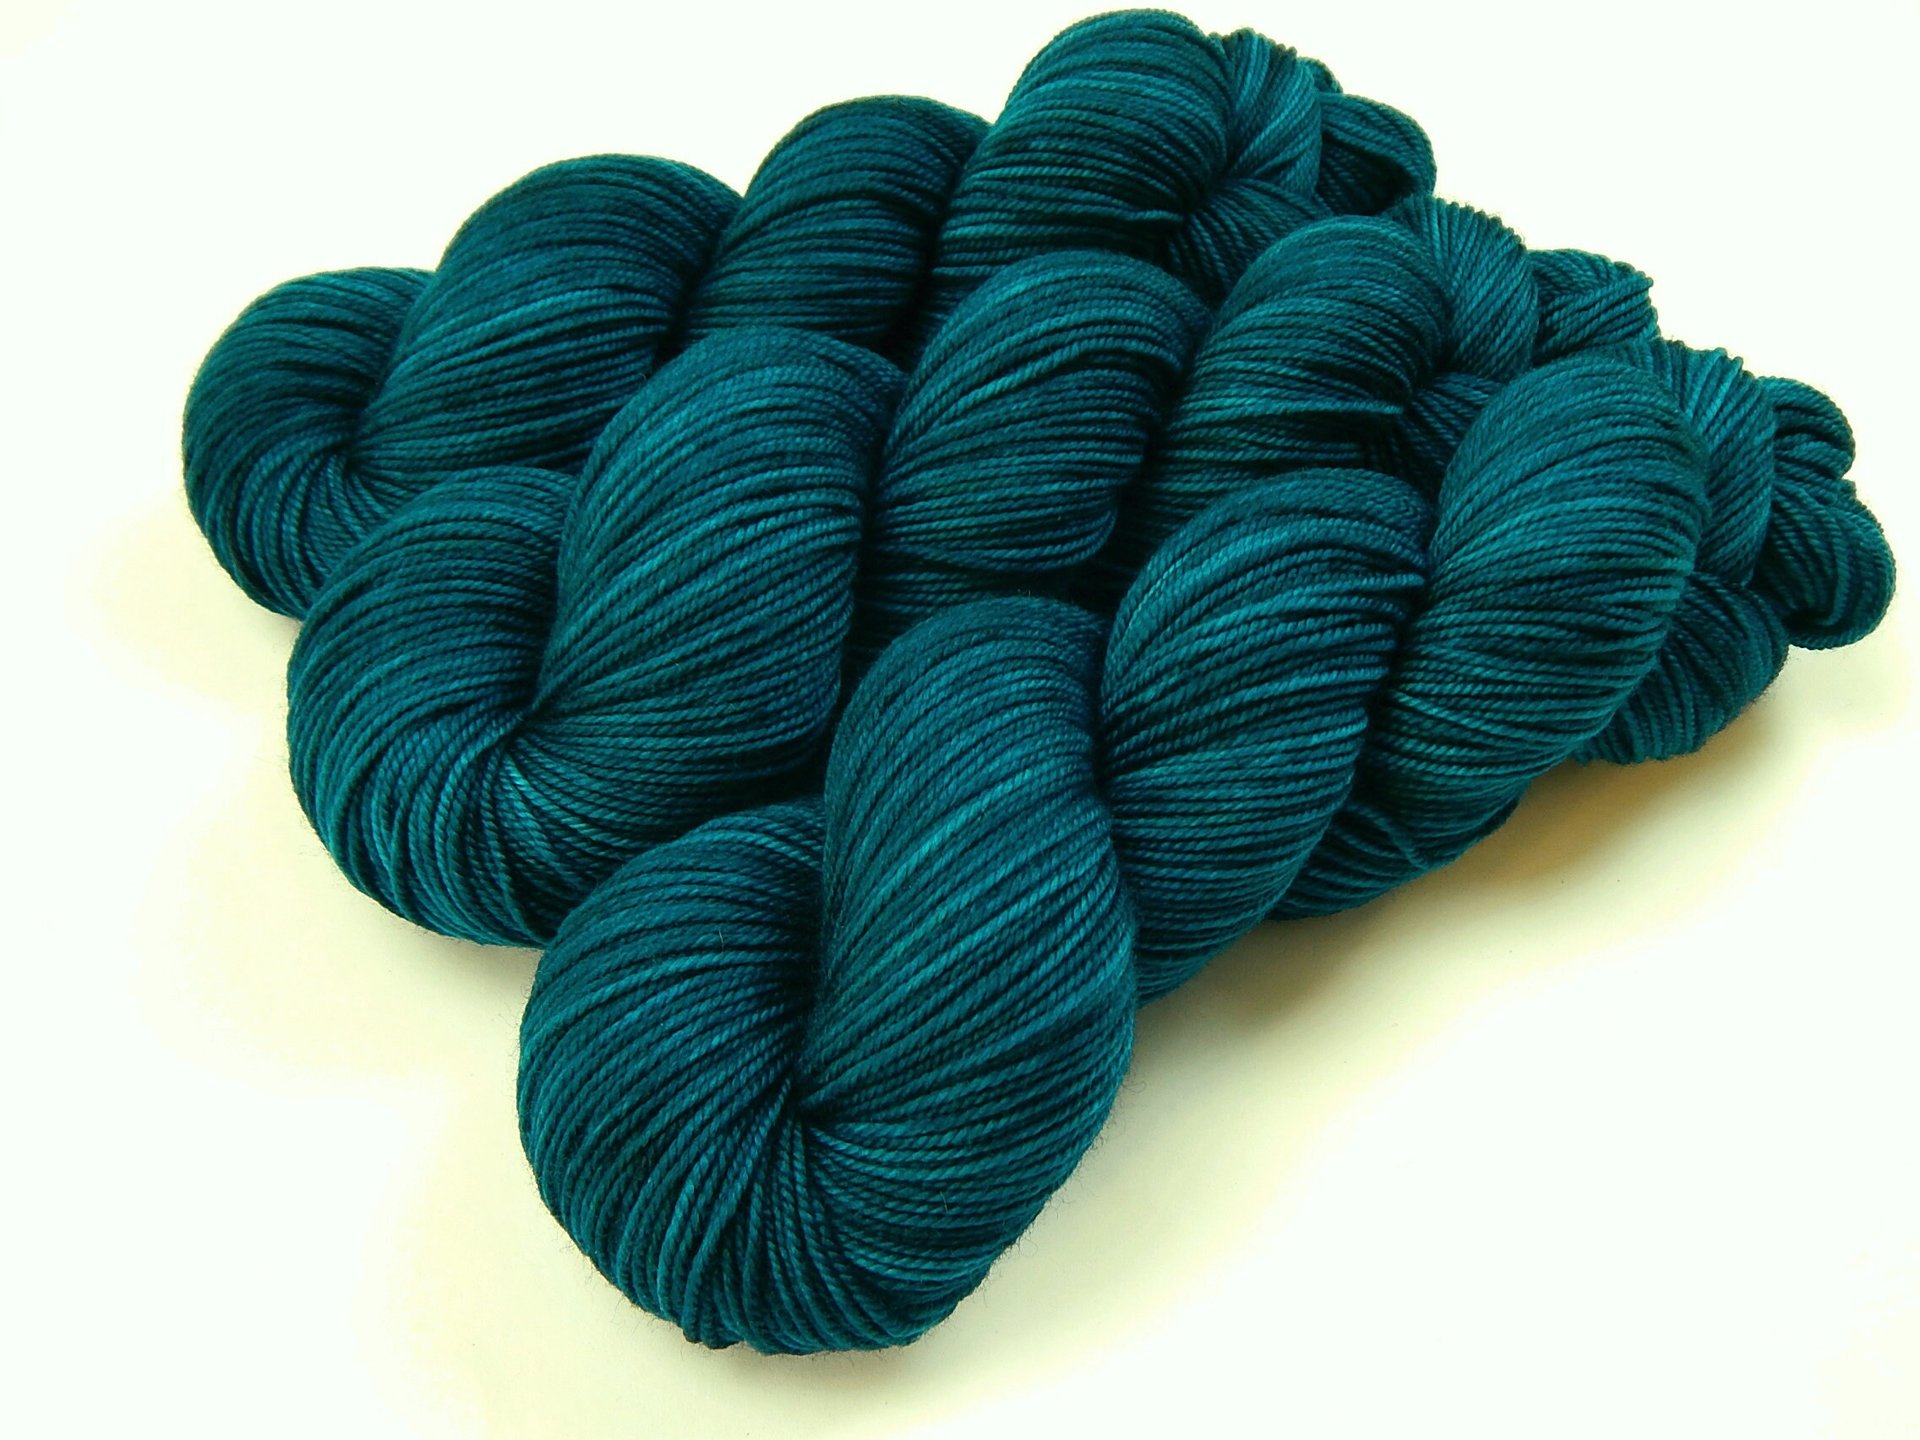 Hand Dyed Yarn, Sport Weight Superwash Merino Wool - Deep Sea Tonal - Indie Dyed Teal Blue Green Knitting Yarn, Semi Solid Heavier Sock Yarn